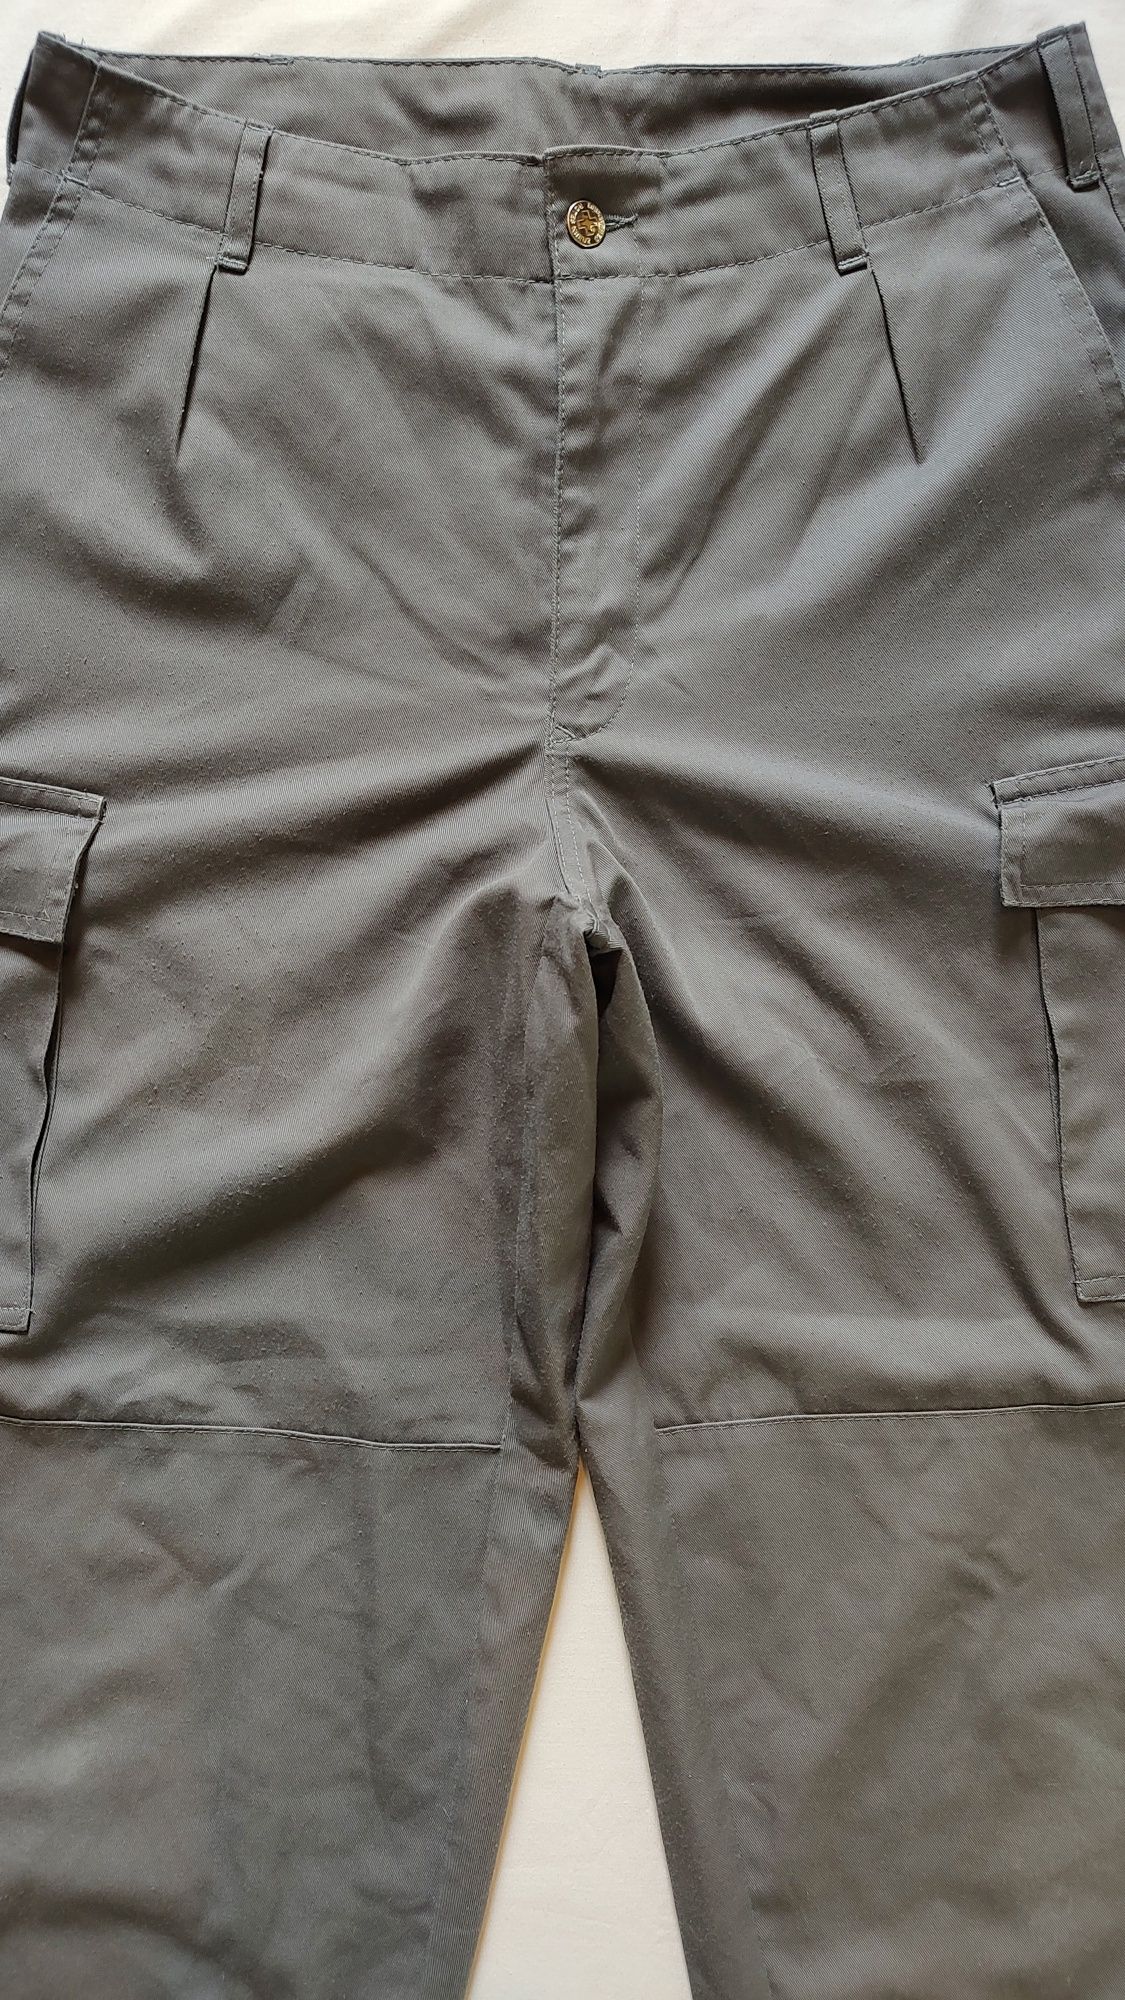 Pantaloni tehnici munca, Nitzsche GmbH, 48